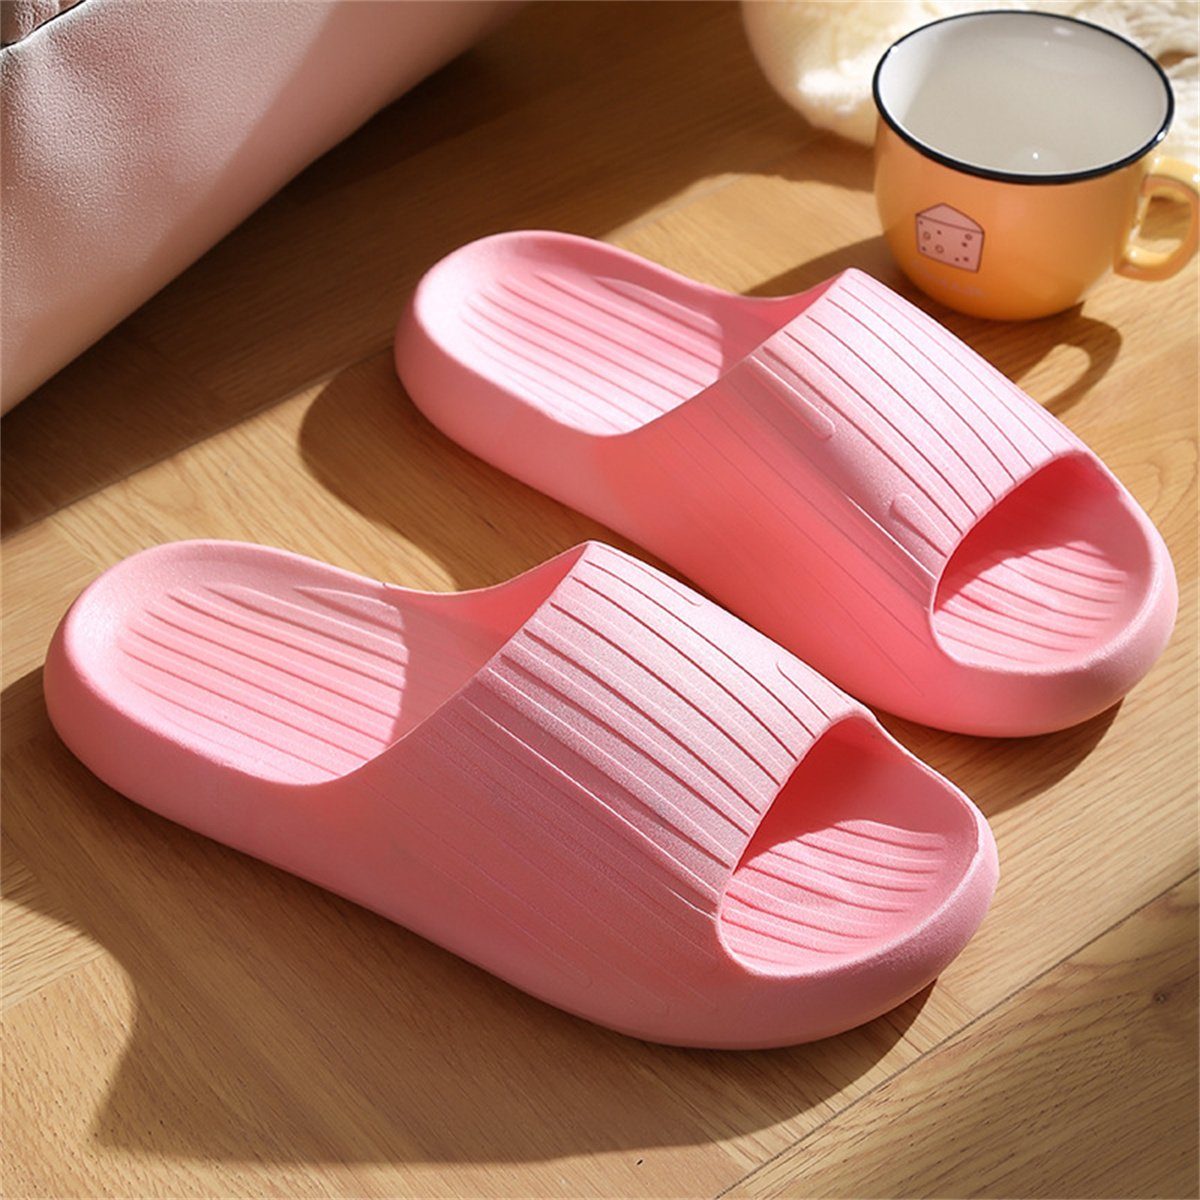 carefully selected Damen-Sandalen und Hausschuhe mit dickem Boden für den Innenbereich Badeschuh rosa